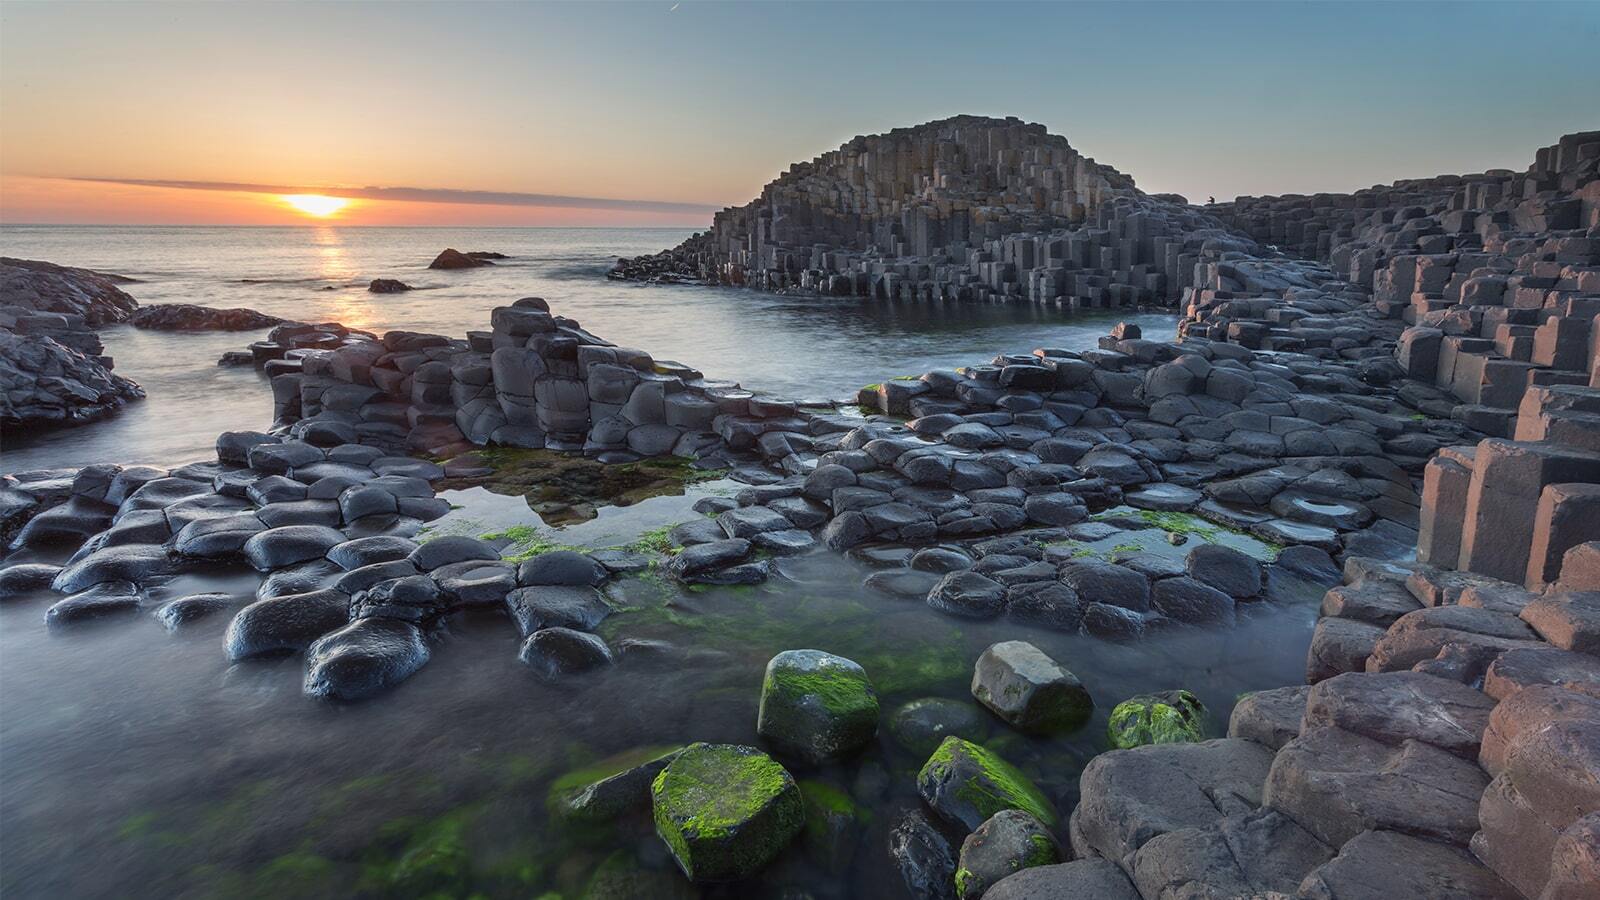 Northern Ireland's most popular tourist destination, the Giant's Causeway, features on Saga's British Isles cruise. Credit: Shutterstock